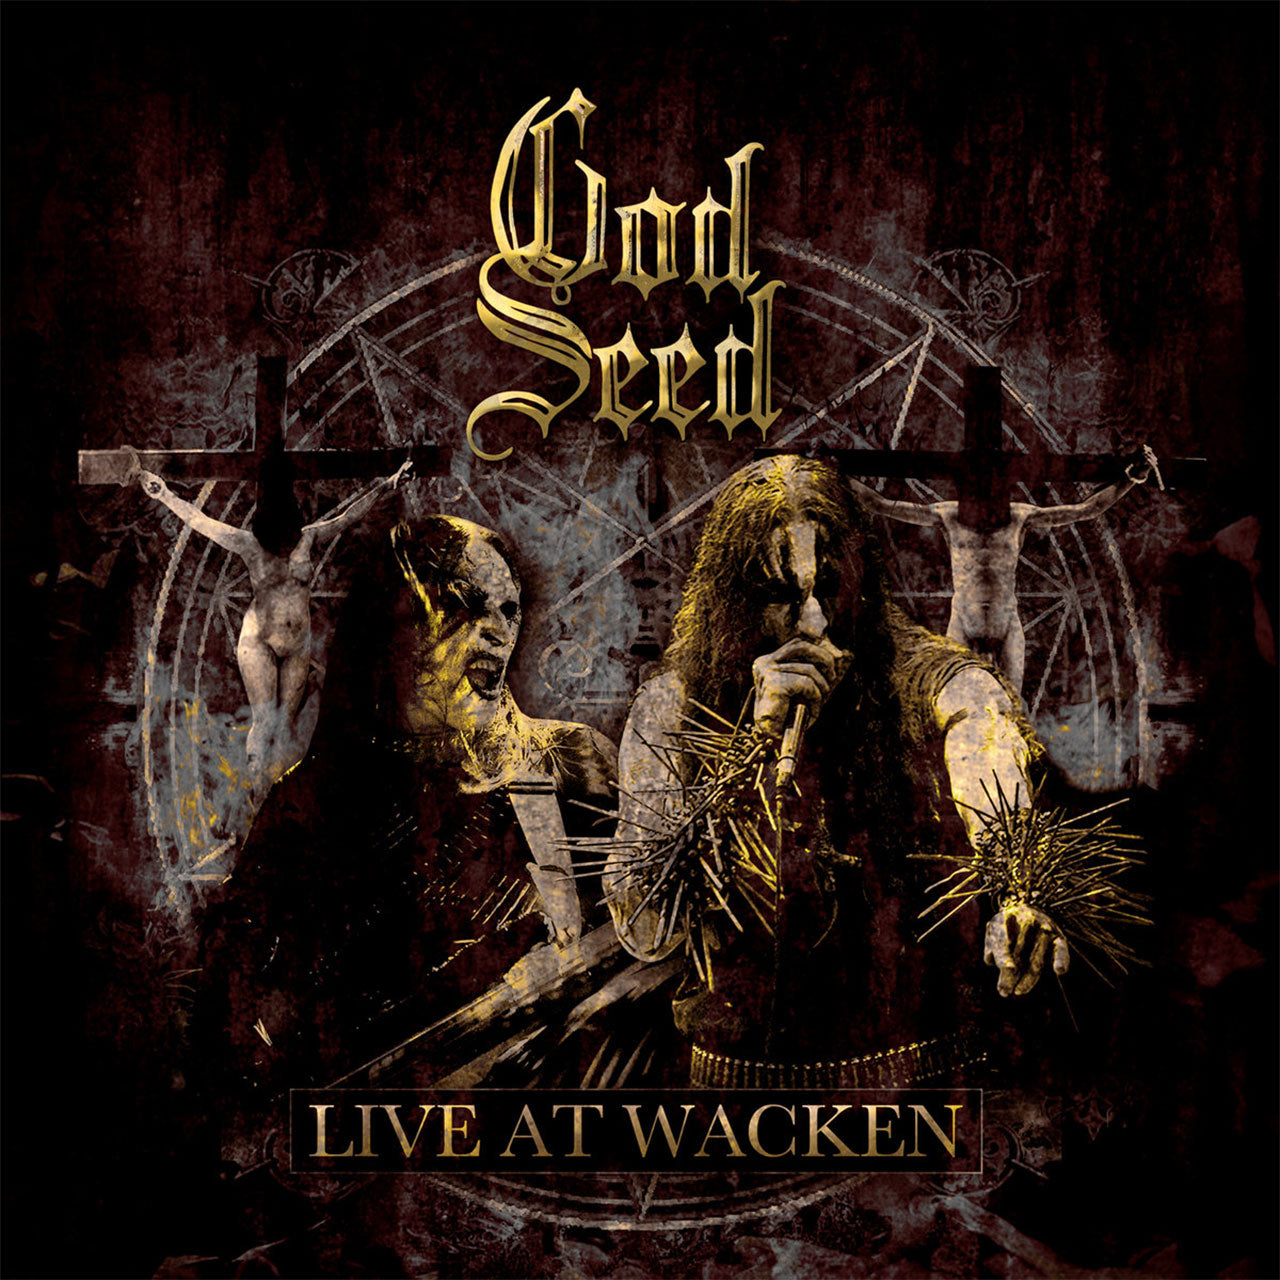 God Seed - Live at Wacken (Digipak CD + DVD)